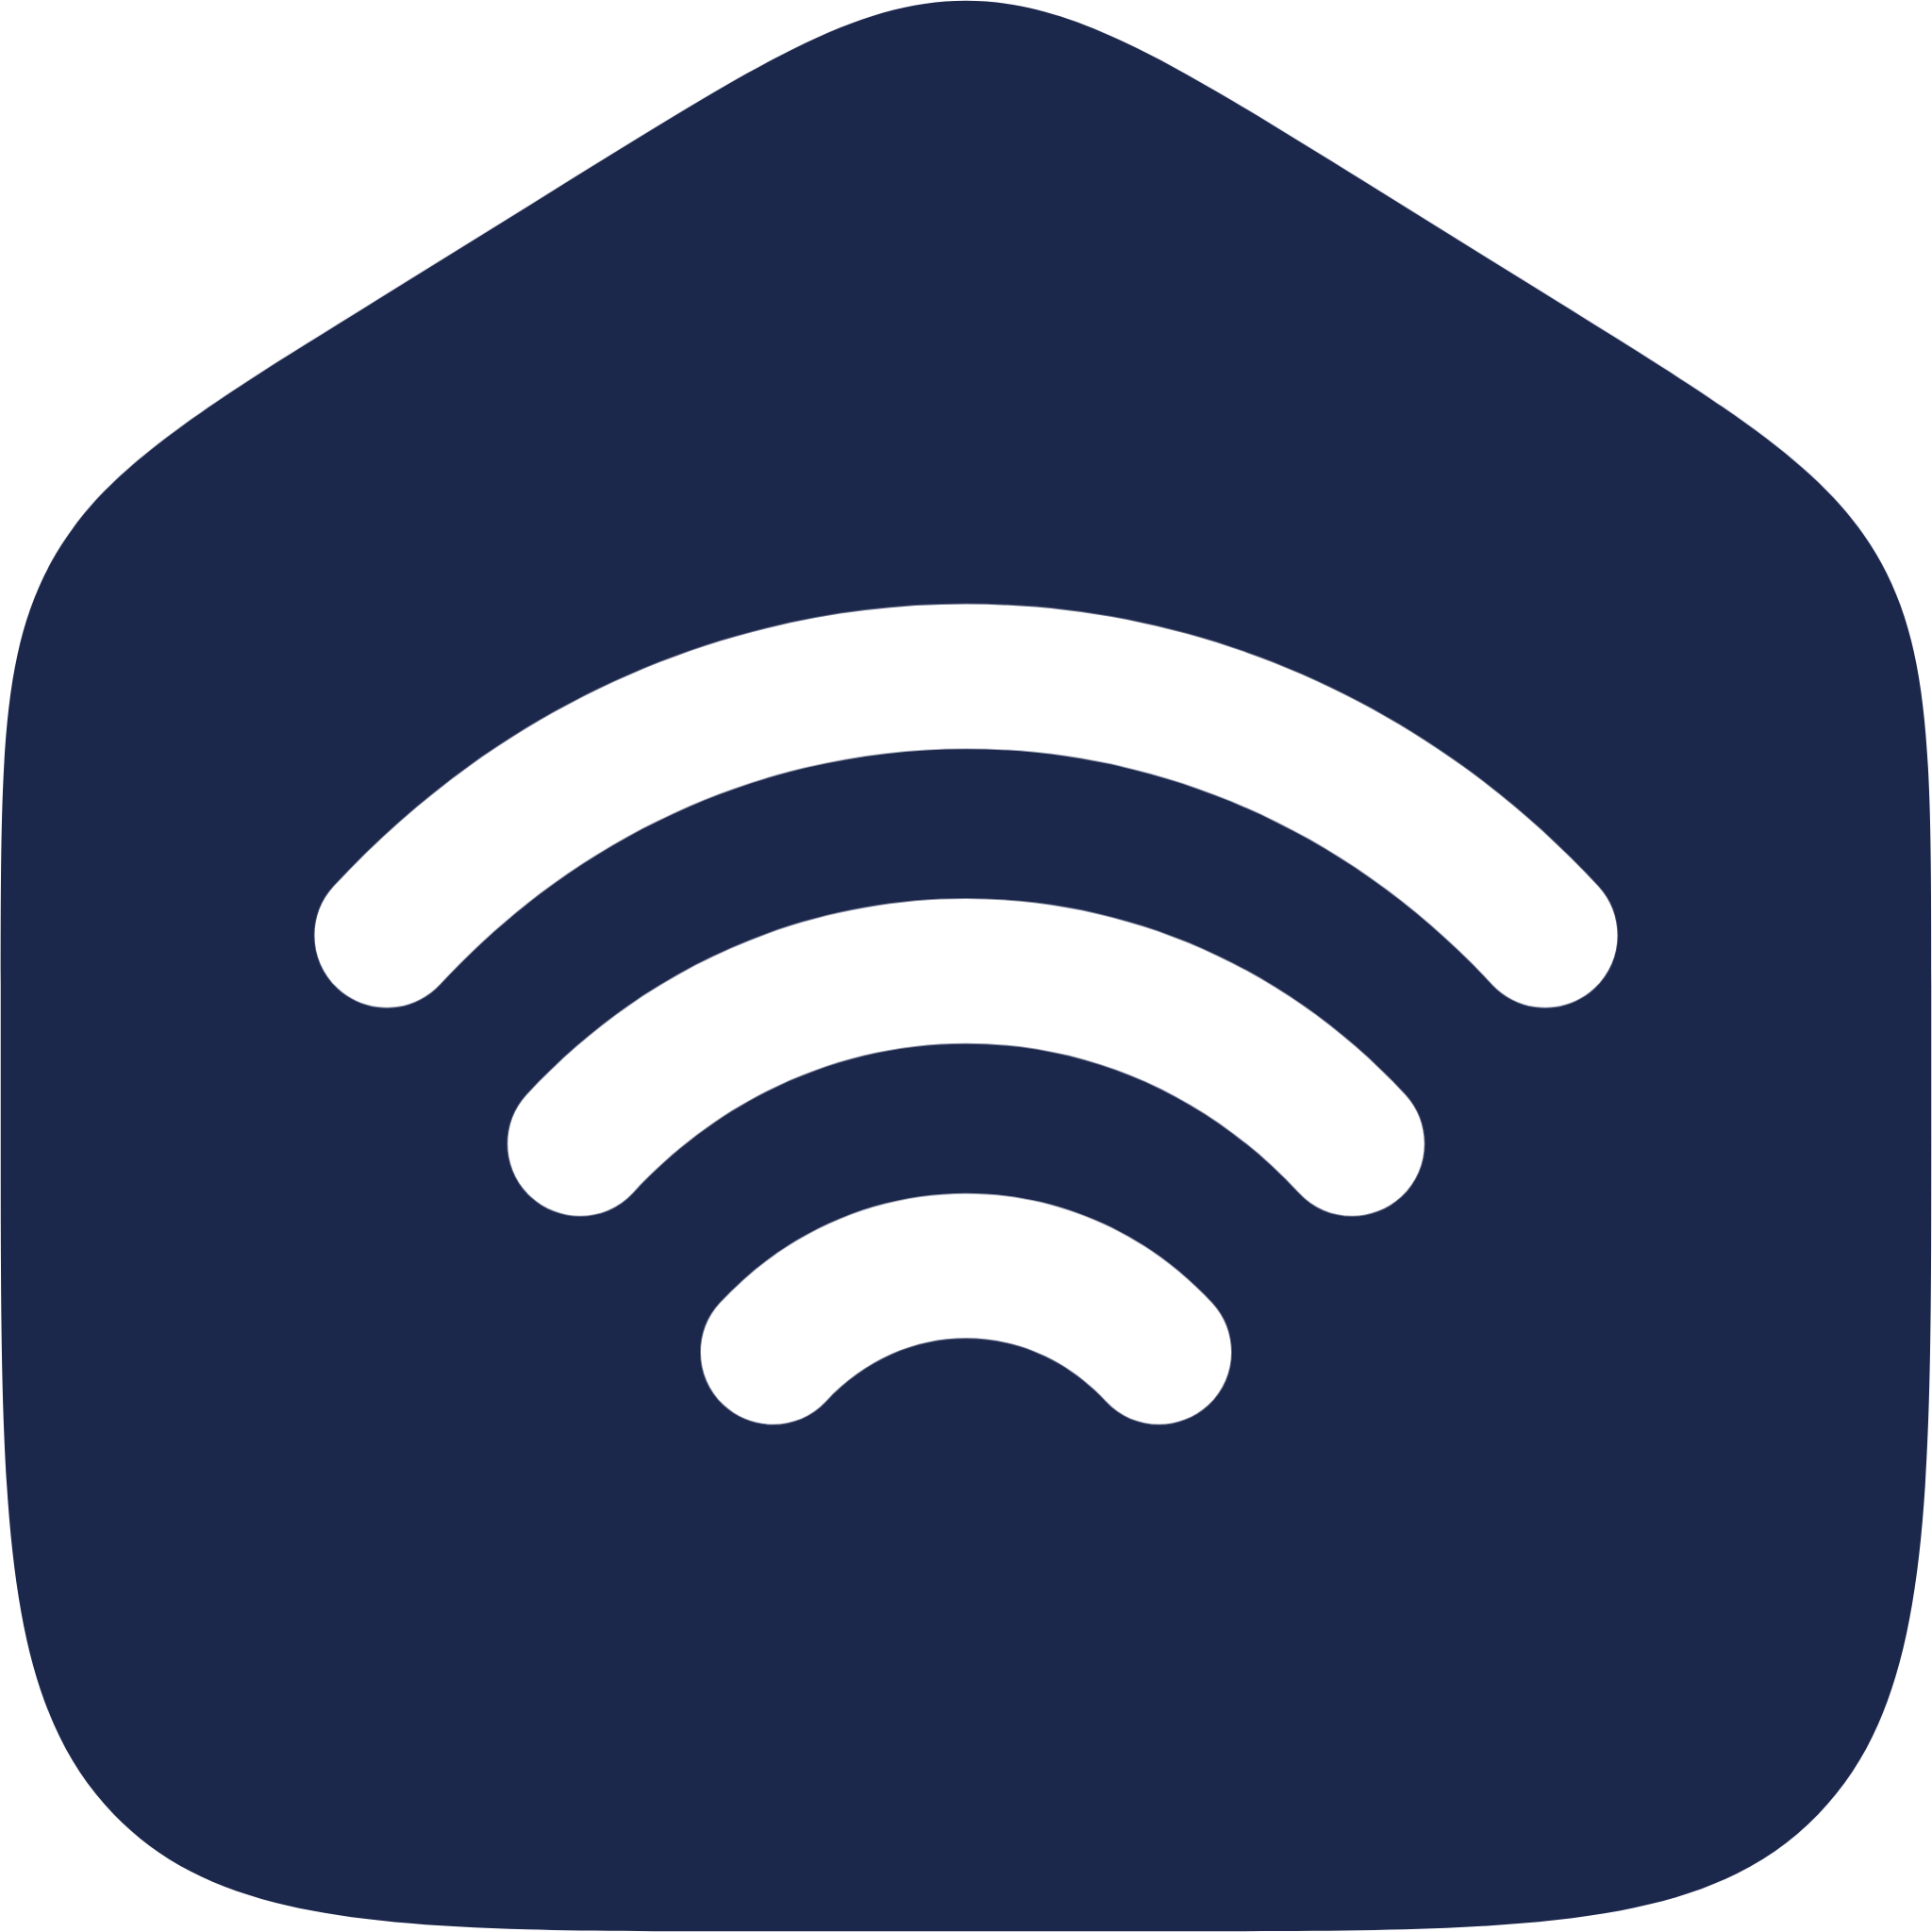 wireless icon transparent